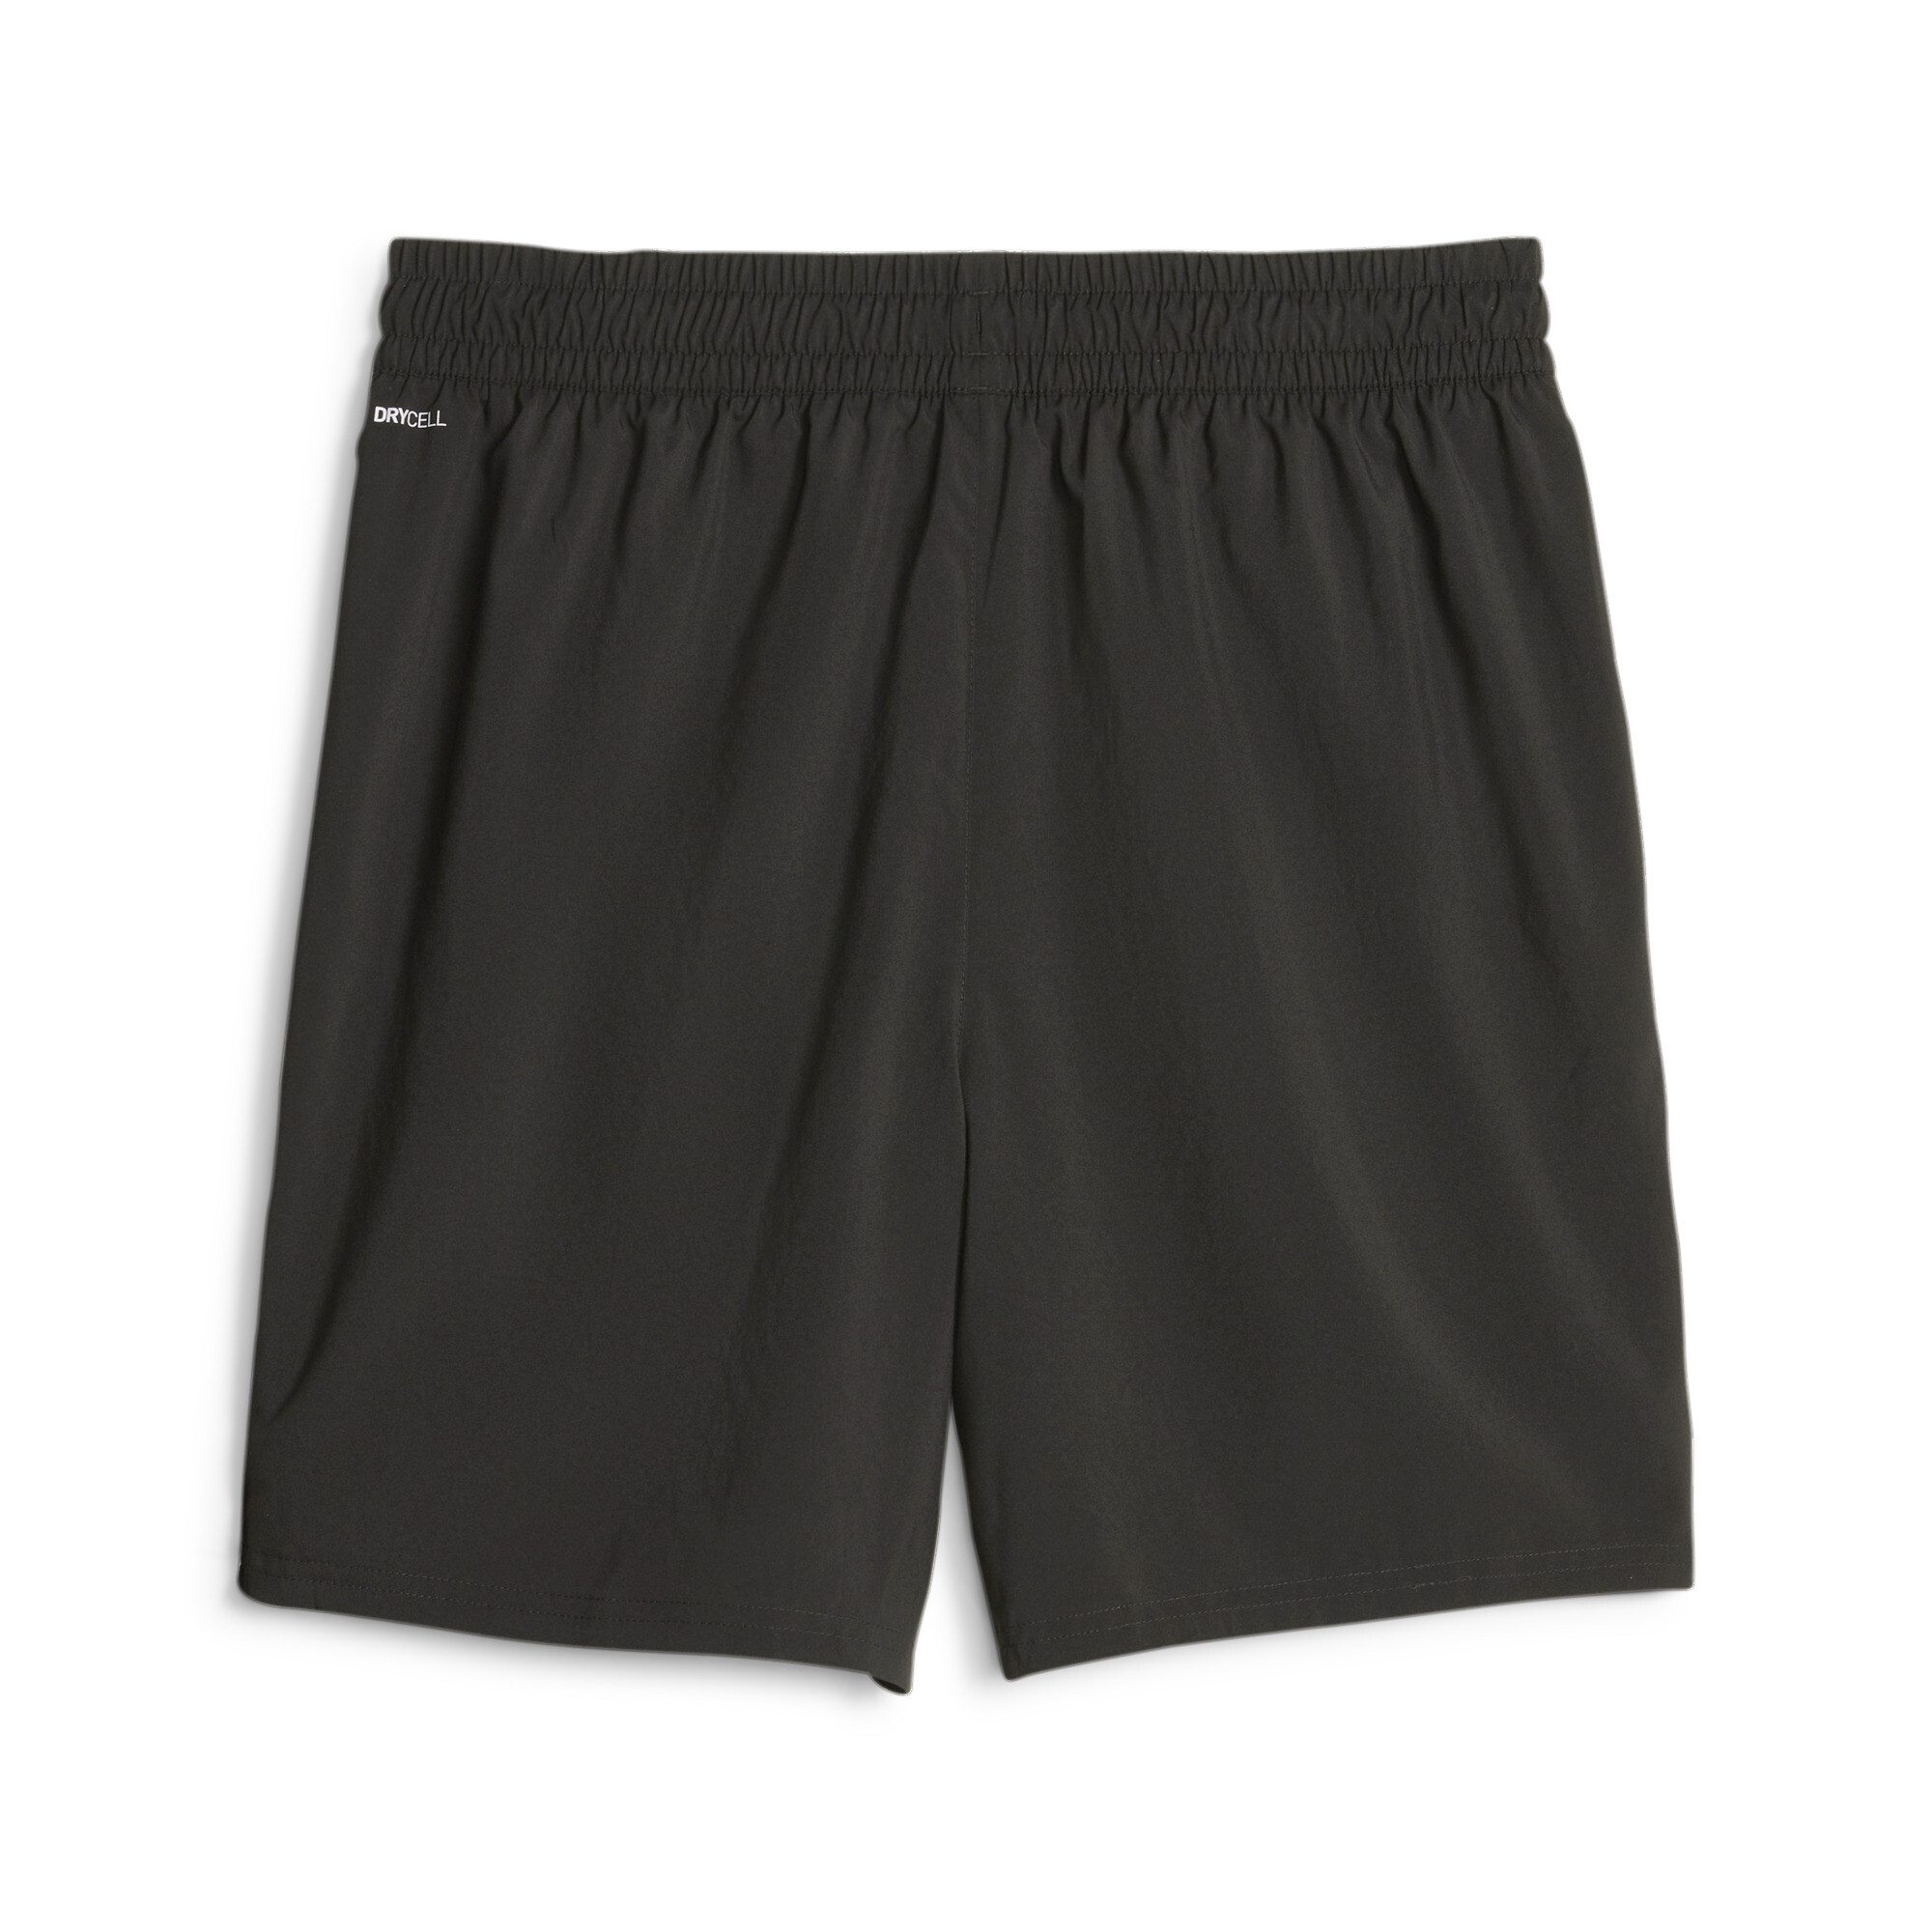 Men's PUMA Fit 7 Training Shorts In Black, Size XL